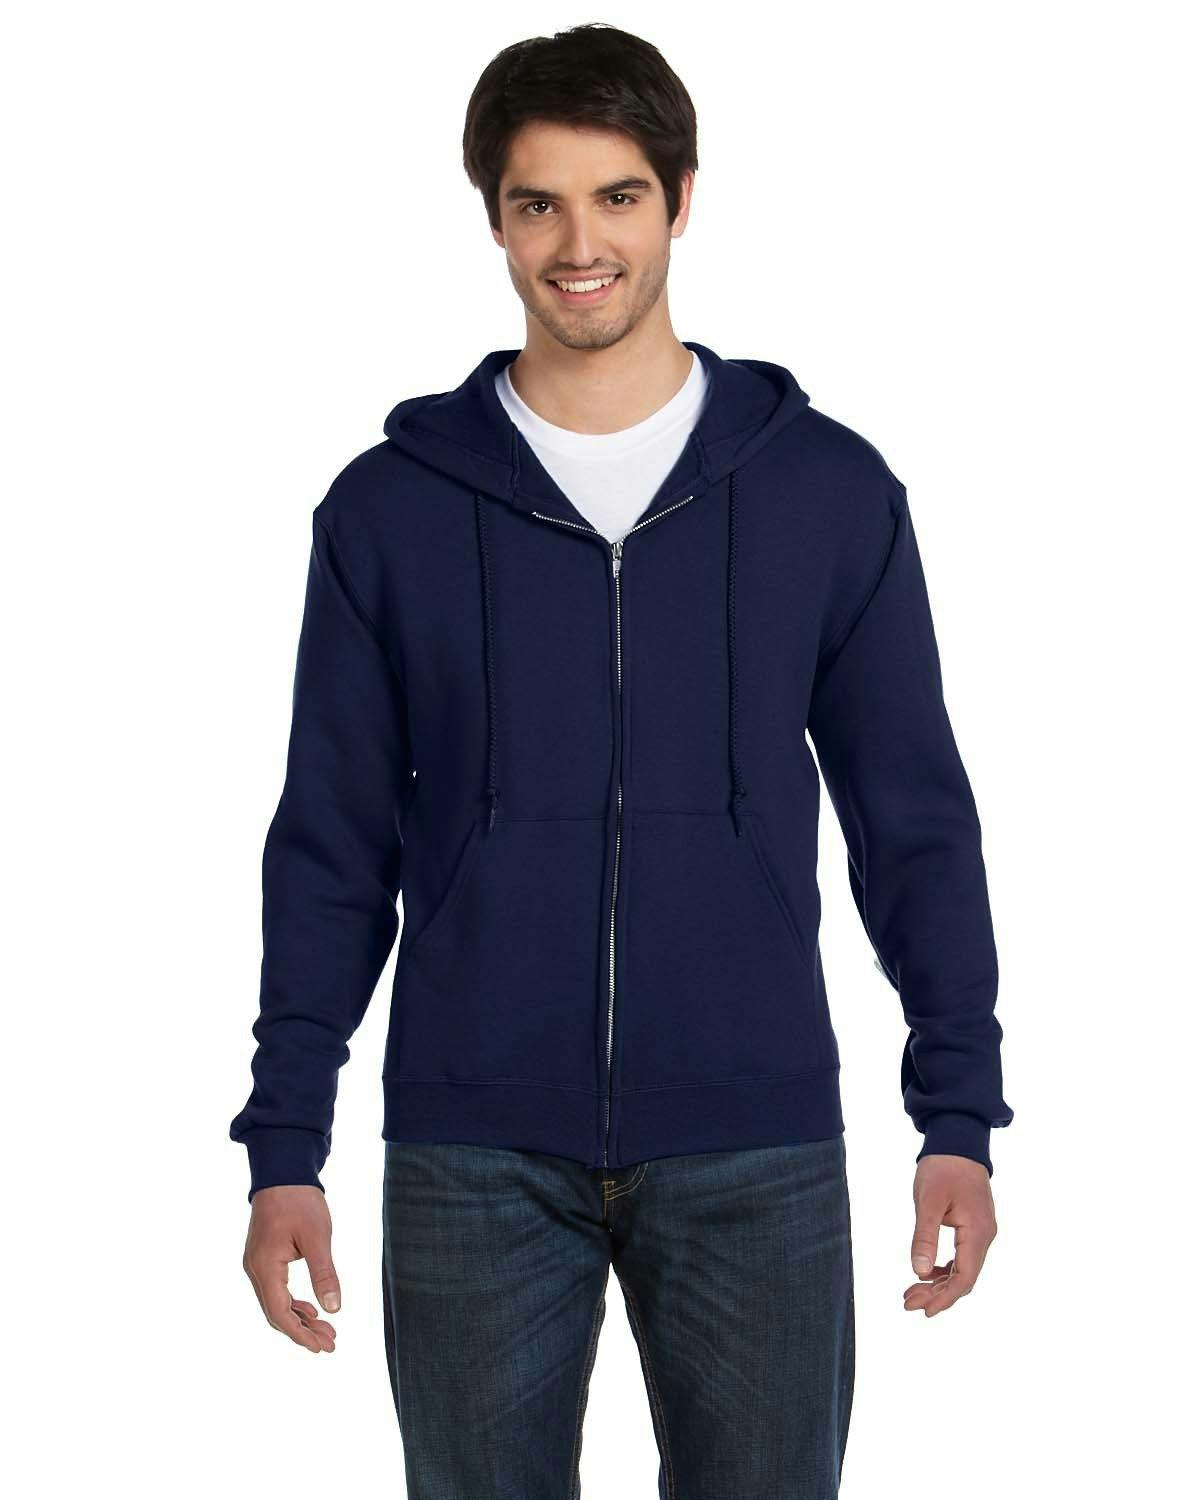 Image for Adult Supercotton™ Full-Zip Hooded Sweatshirt